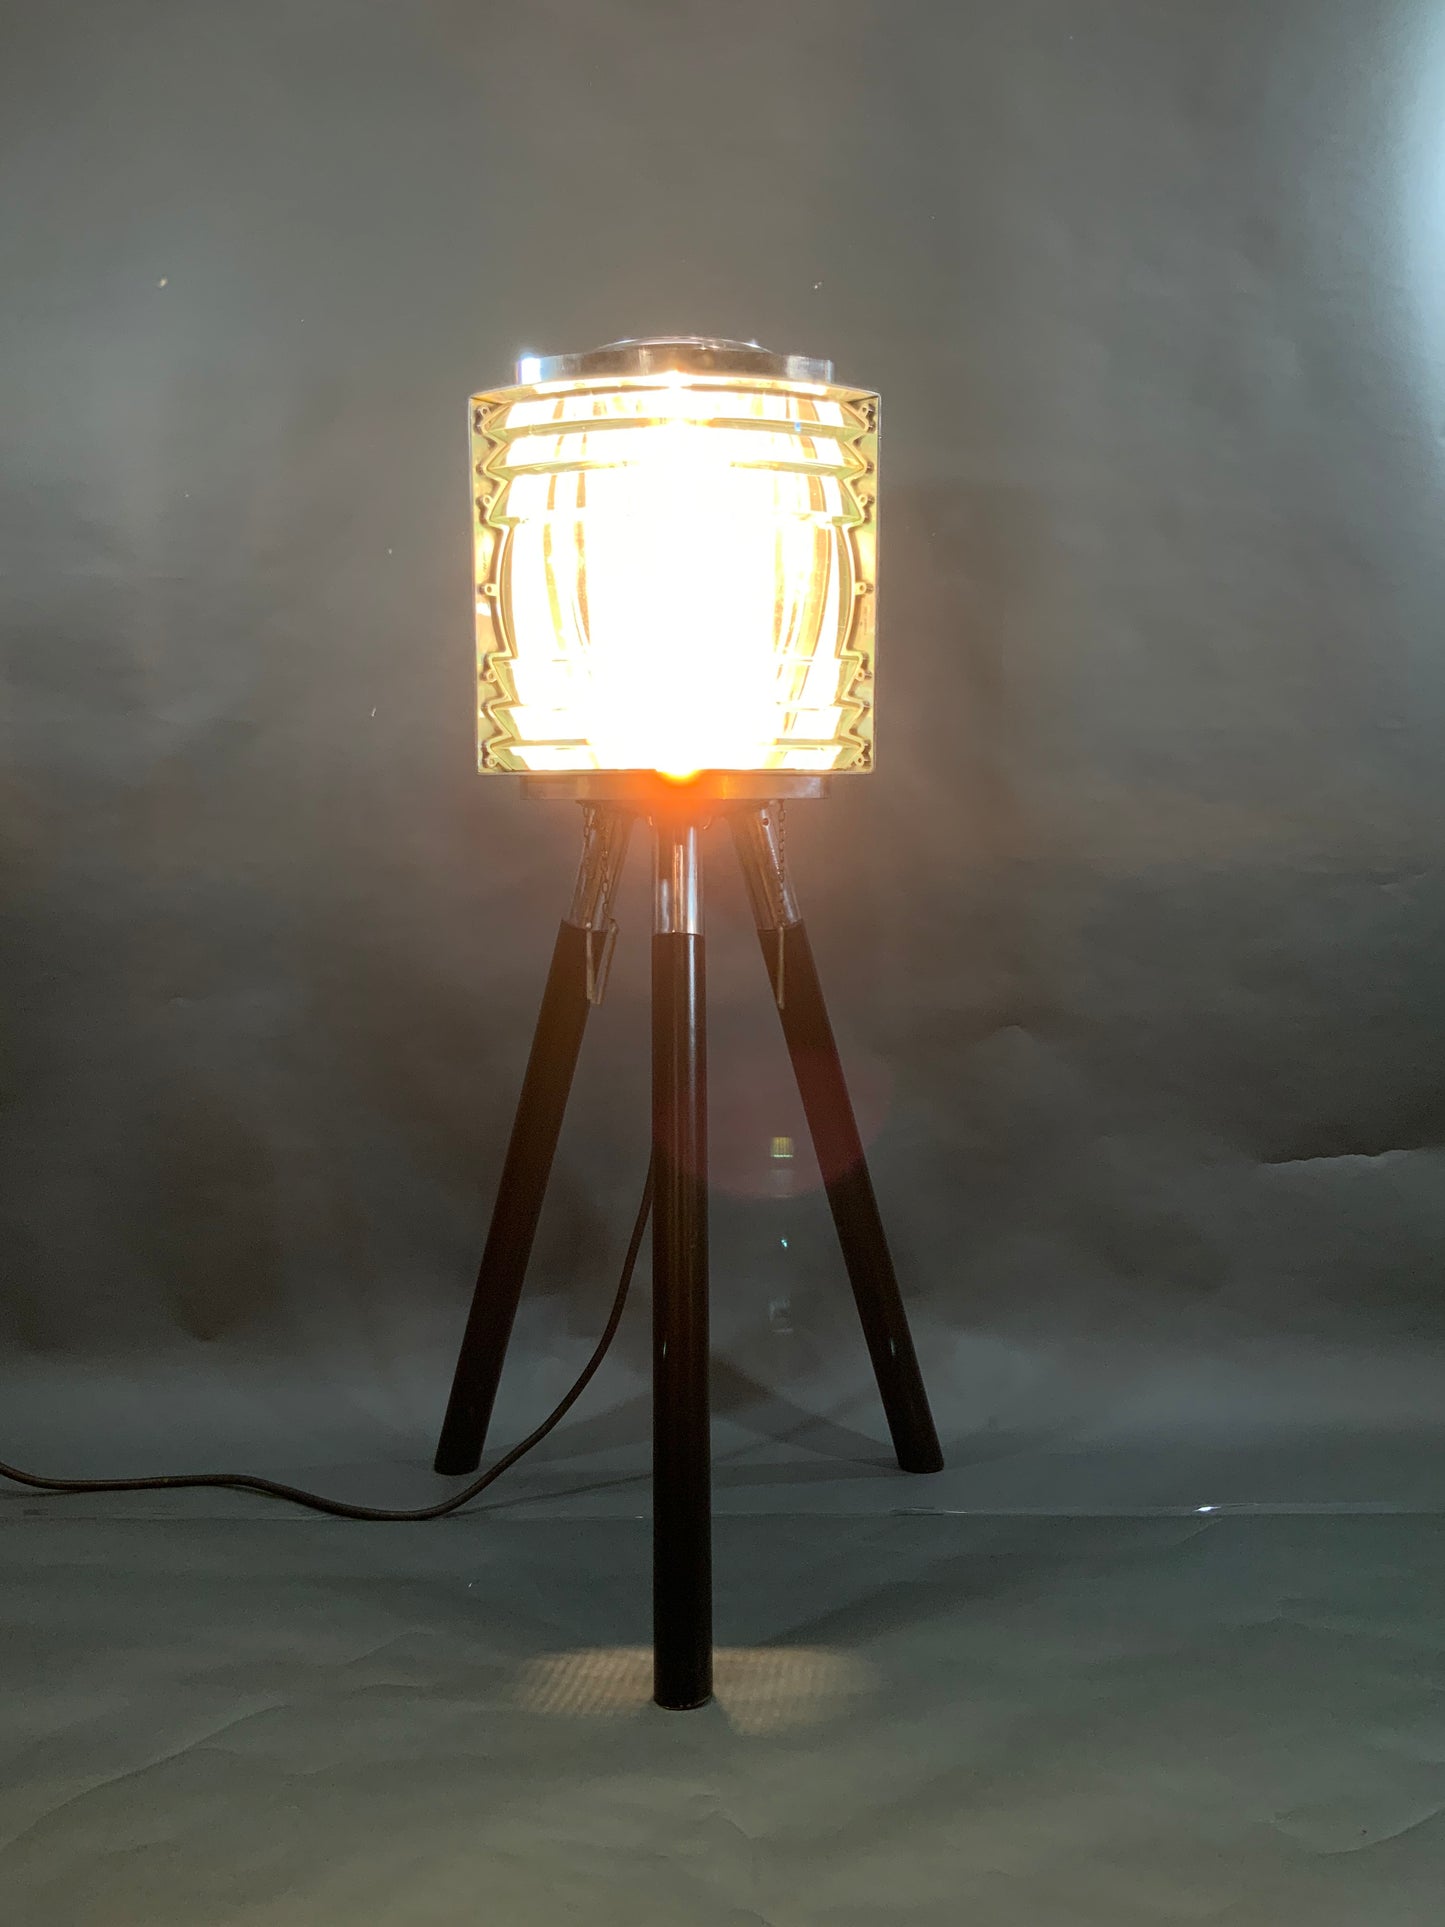 Maritime Range Light with Polished Aluminum Body on Three Legs - Lannan Gallery